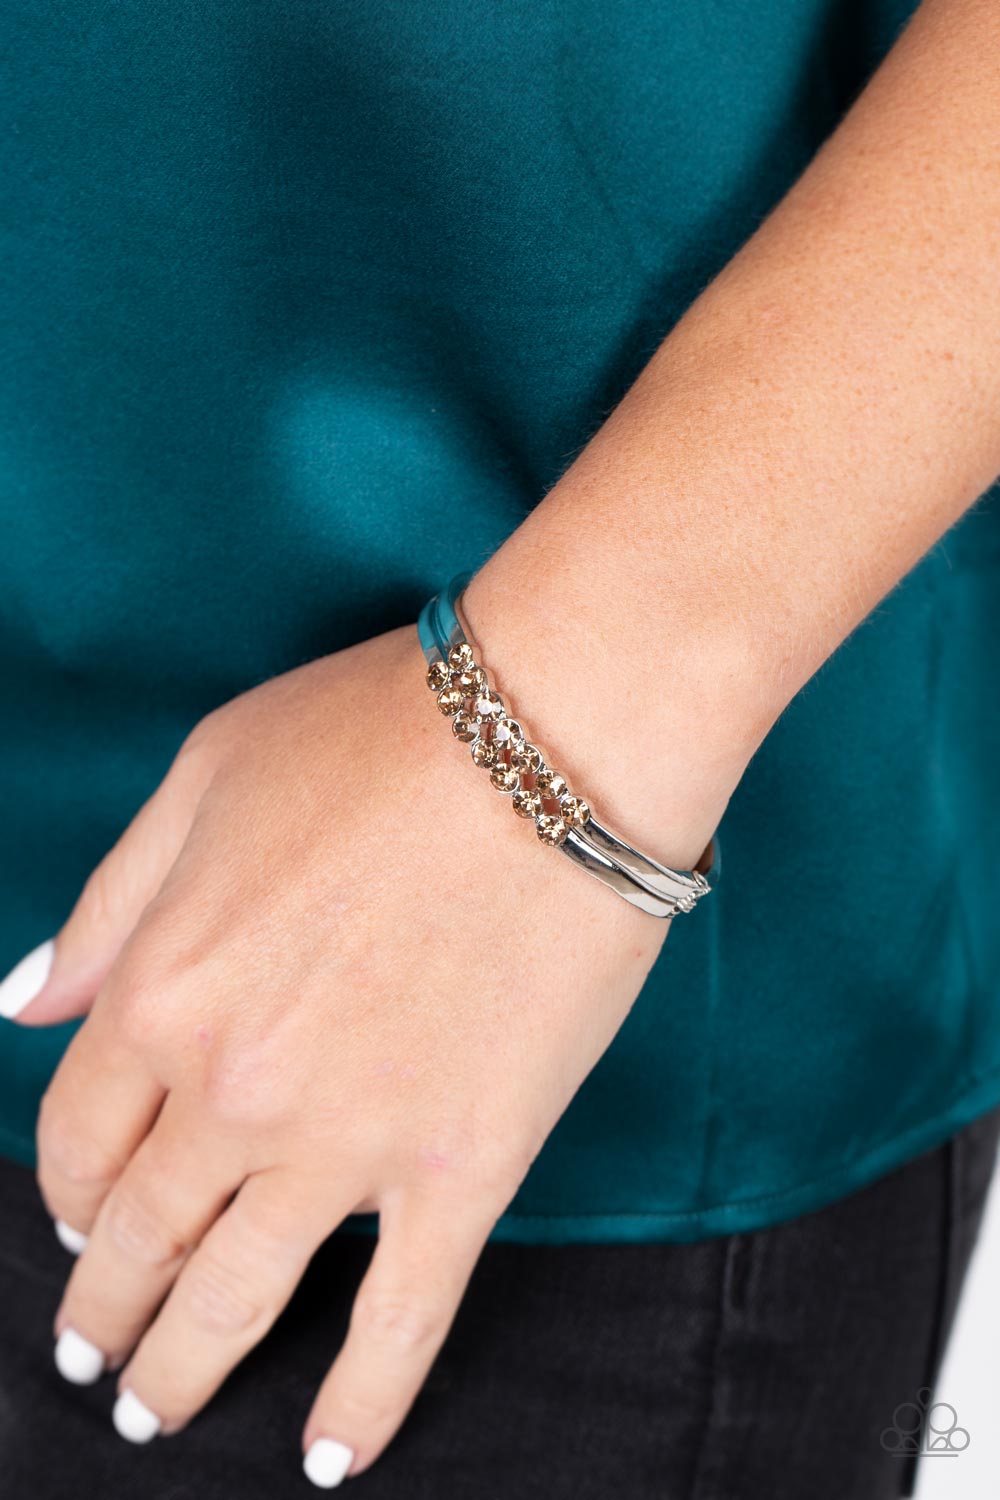 Doubled Down Dazzle Brown Rhinestone Bracelet - Paparazzi Accessories-on model - CarasShop.com - $5 Jewelry by Cara Jewels